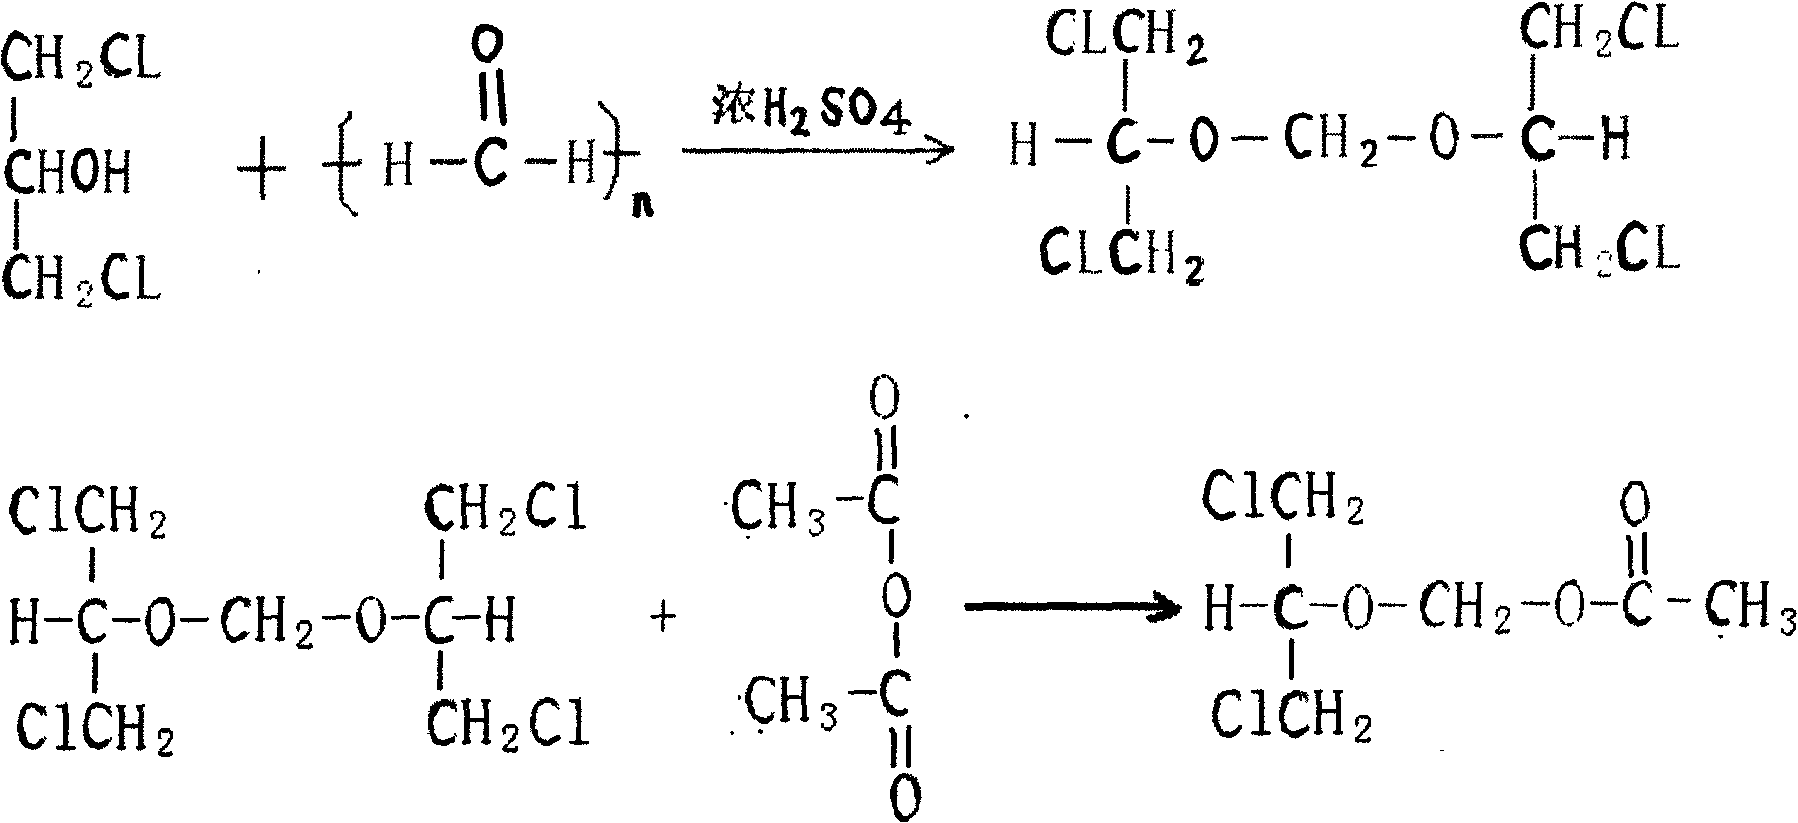 Preparation method of 2-acetoxyl group methoxy group-1.3-propylene dichloride